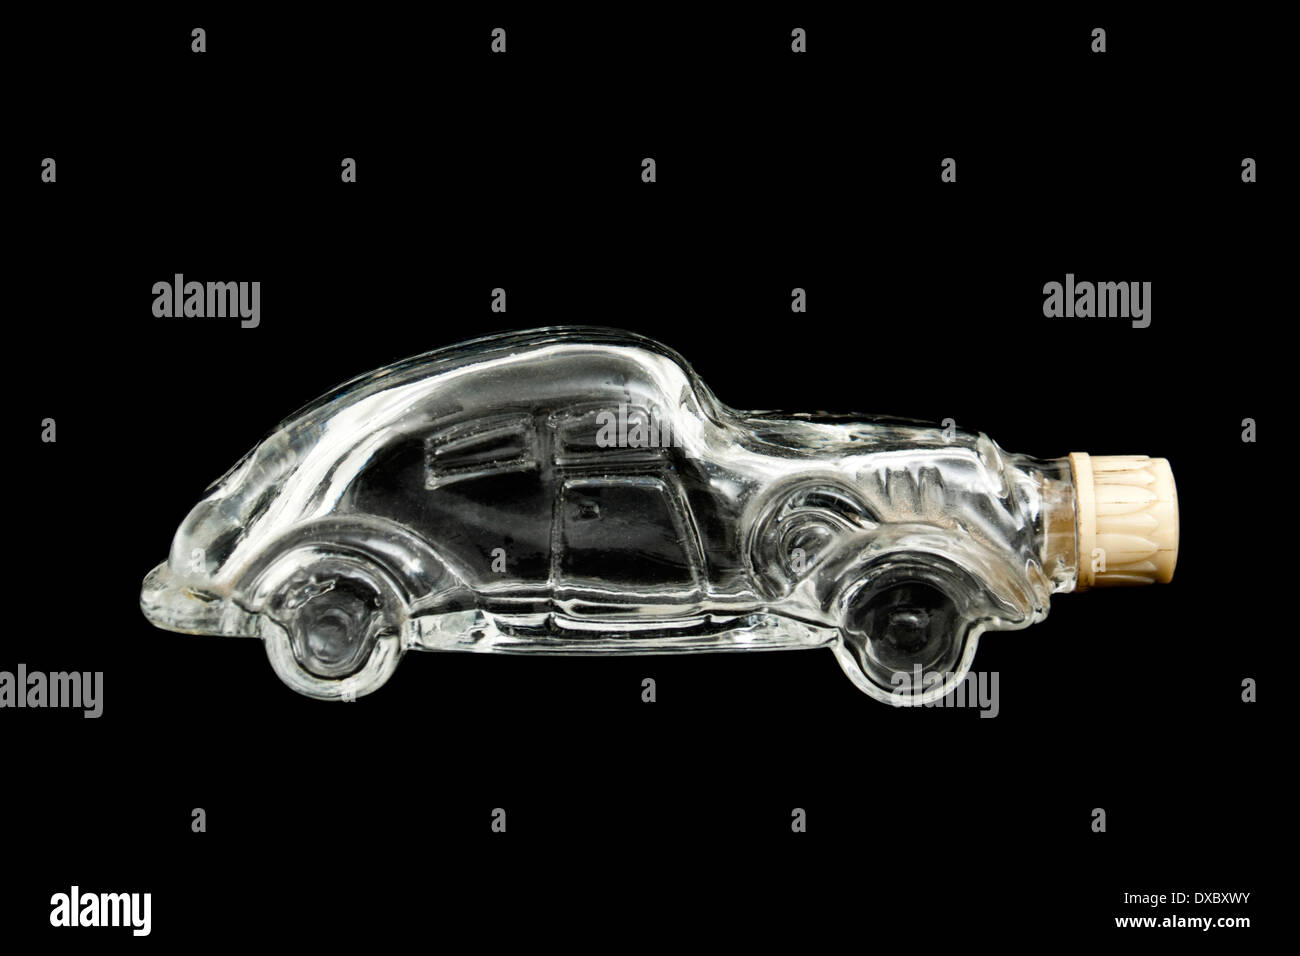 Auto parfüm -Fotos und -Bildmaterial in hoher Auflösung – Alamy